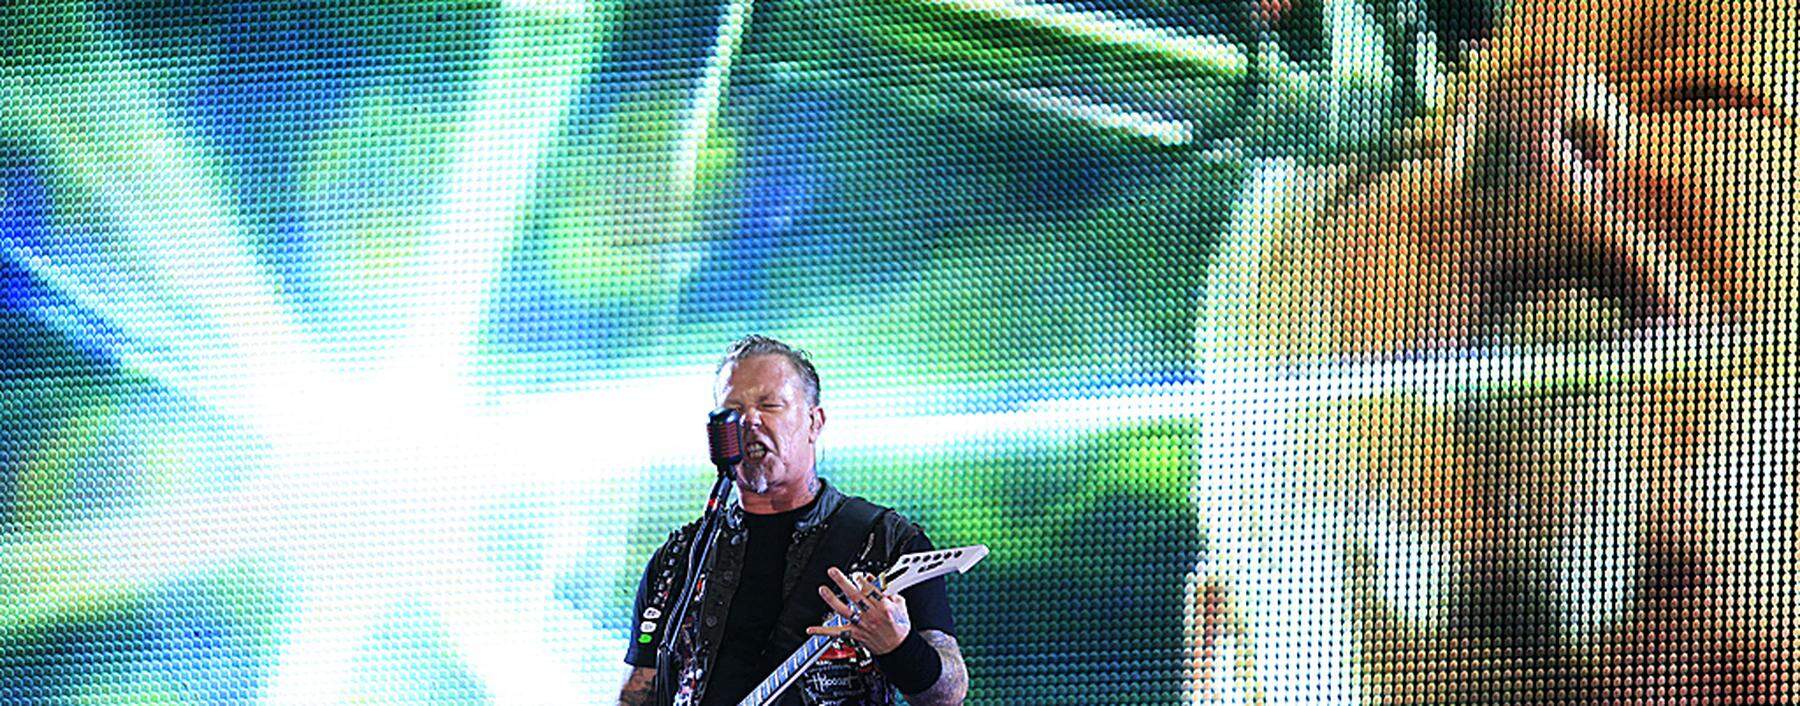 Hetfield of U.S. band Metallica performs at the Rock in Rio Music Festival in Rio de Janeiro